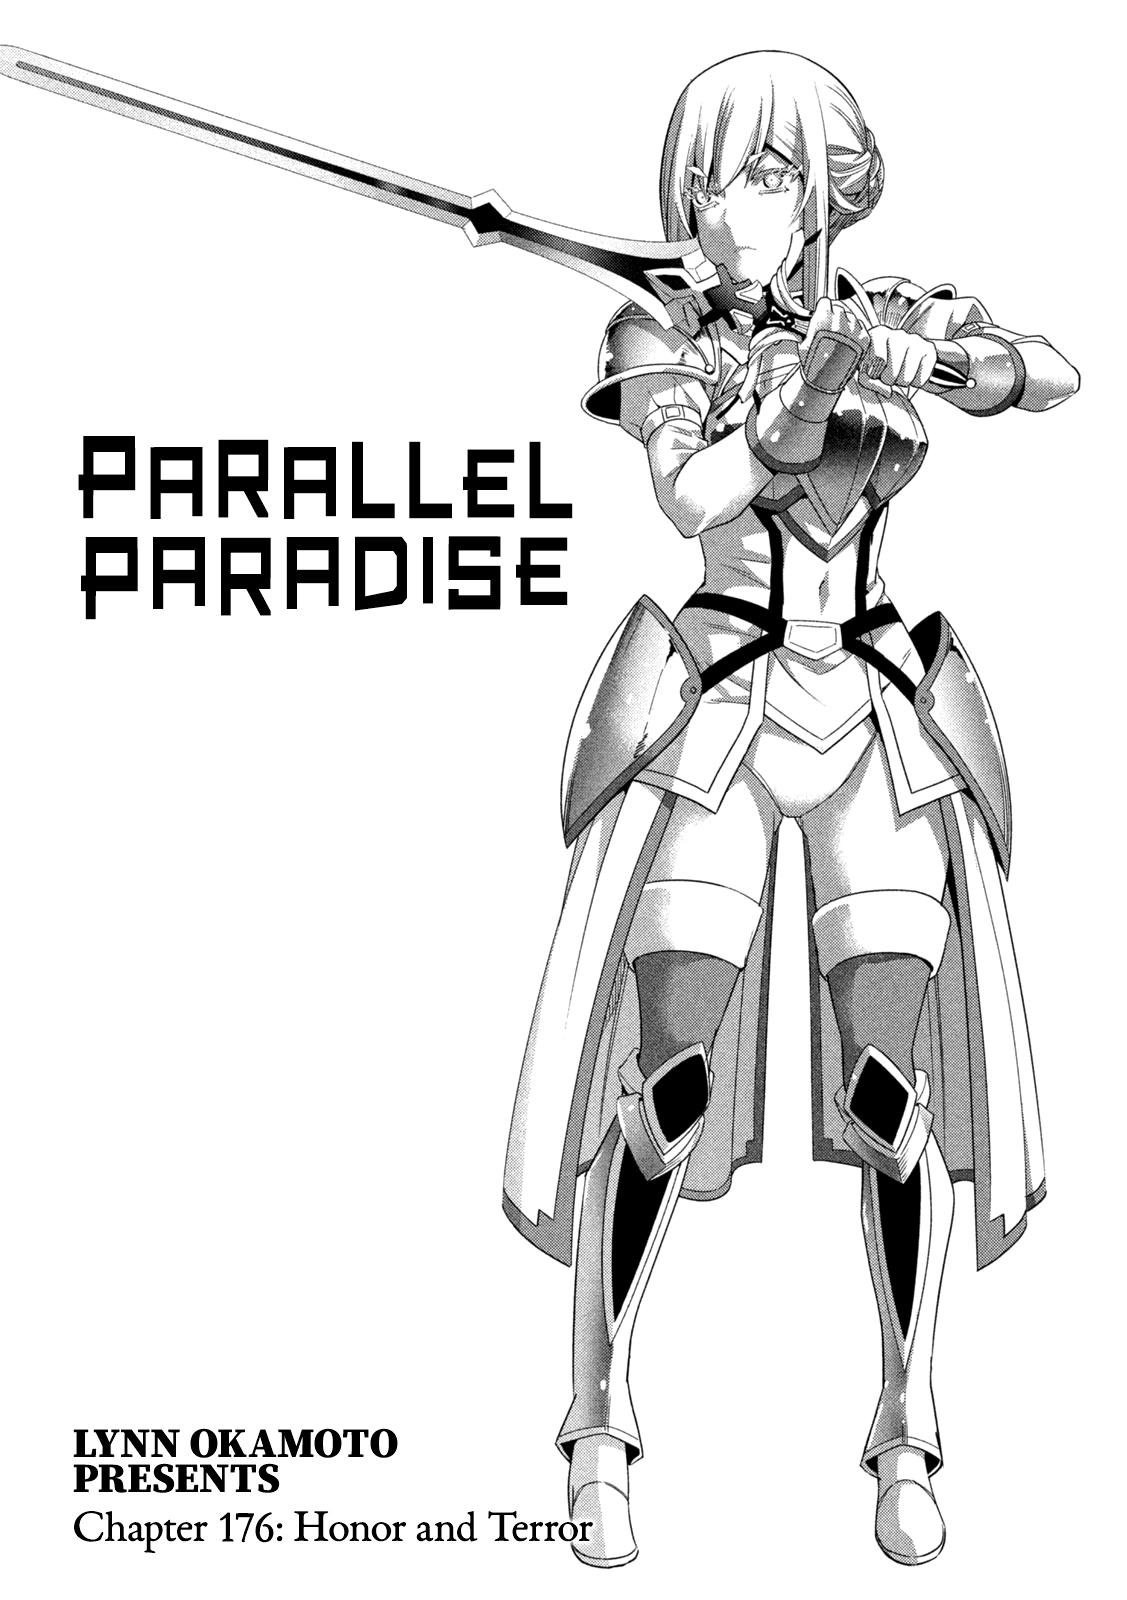 Read Parallel Paradise Chapter 210: Despair on Mangakakalot